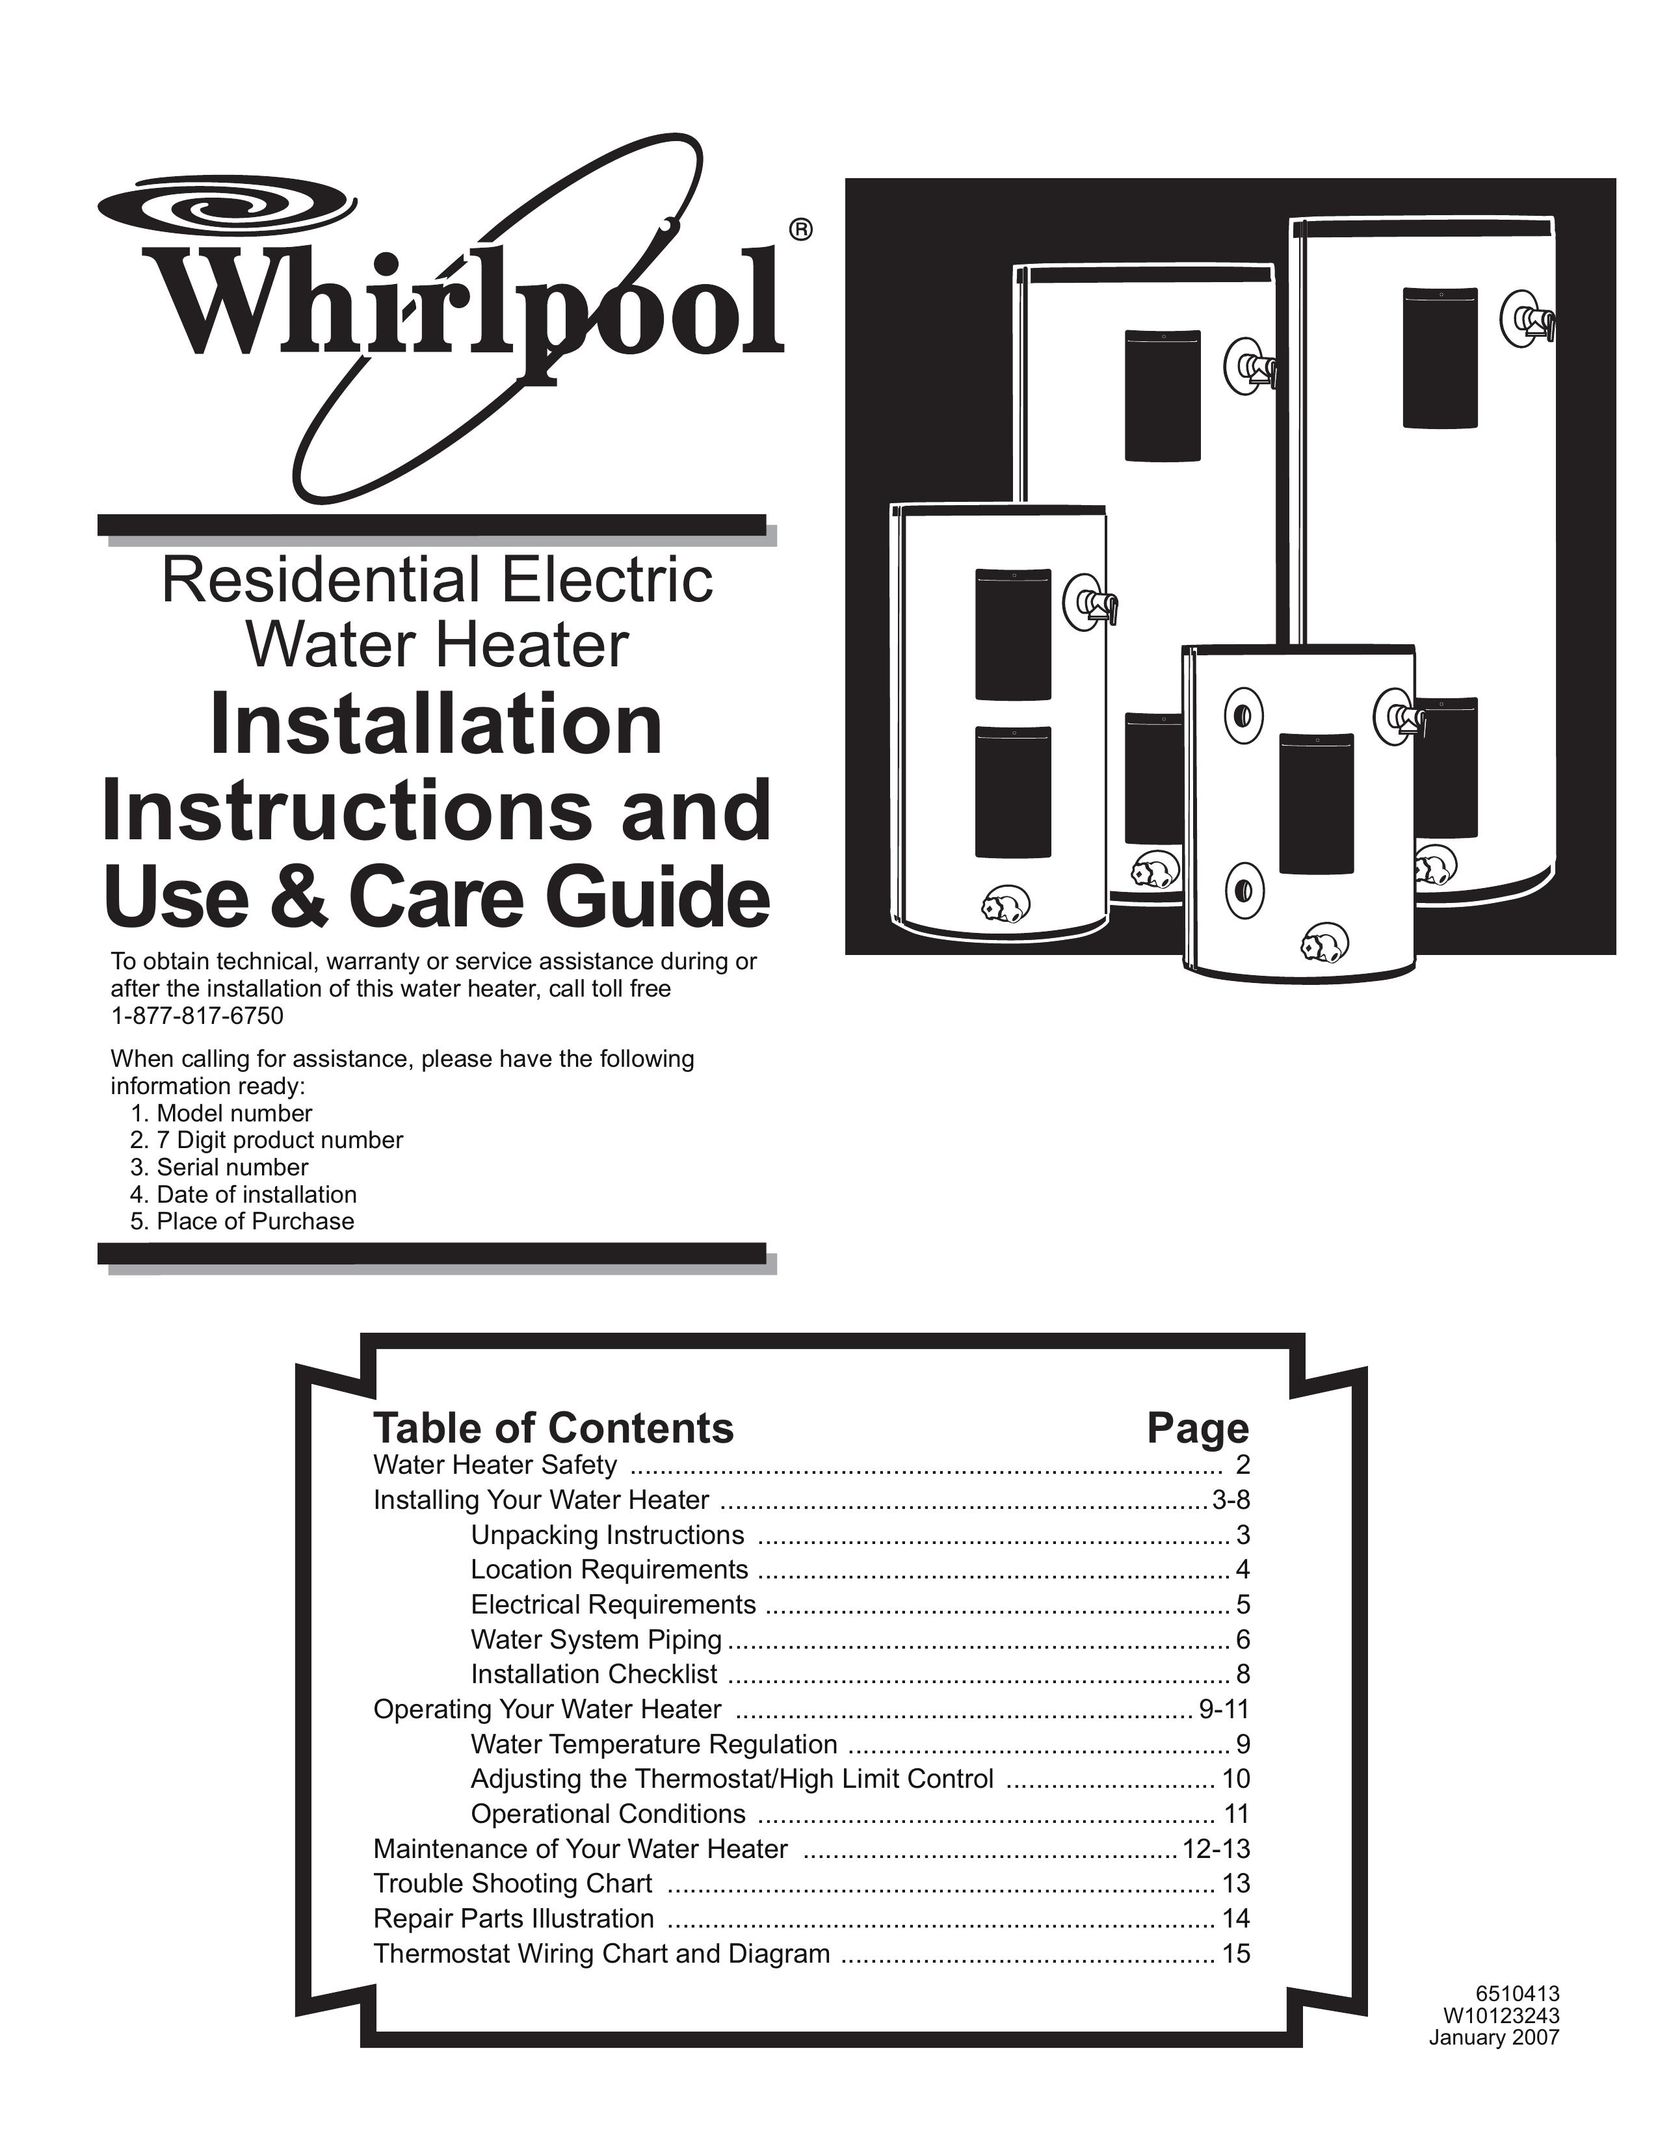 Whirlpool 140425 Water Heater User Manual